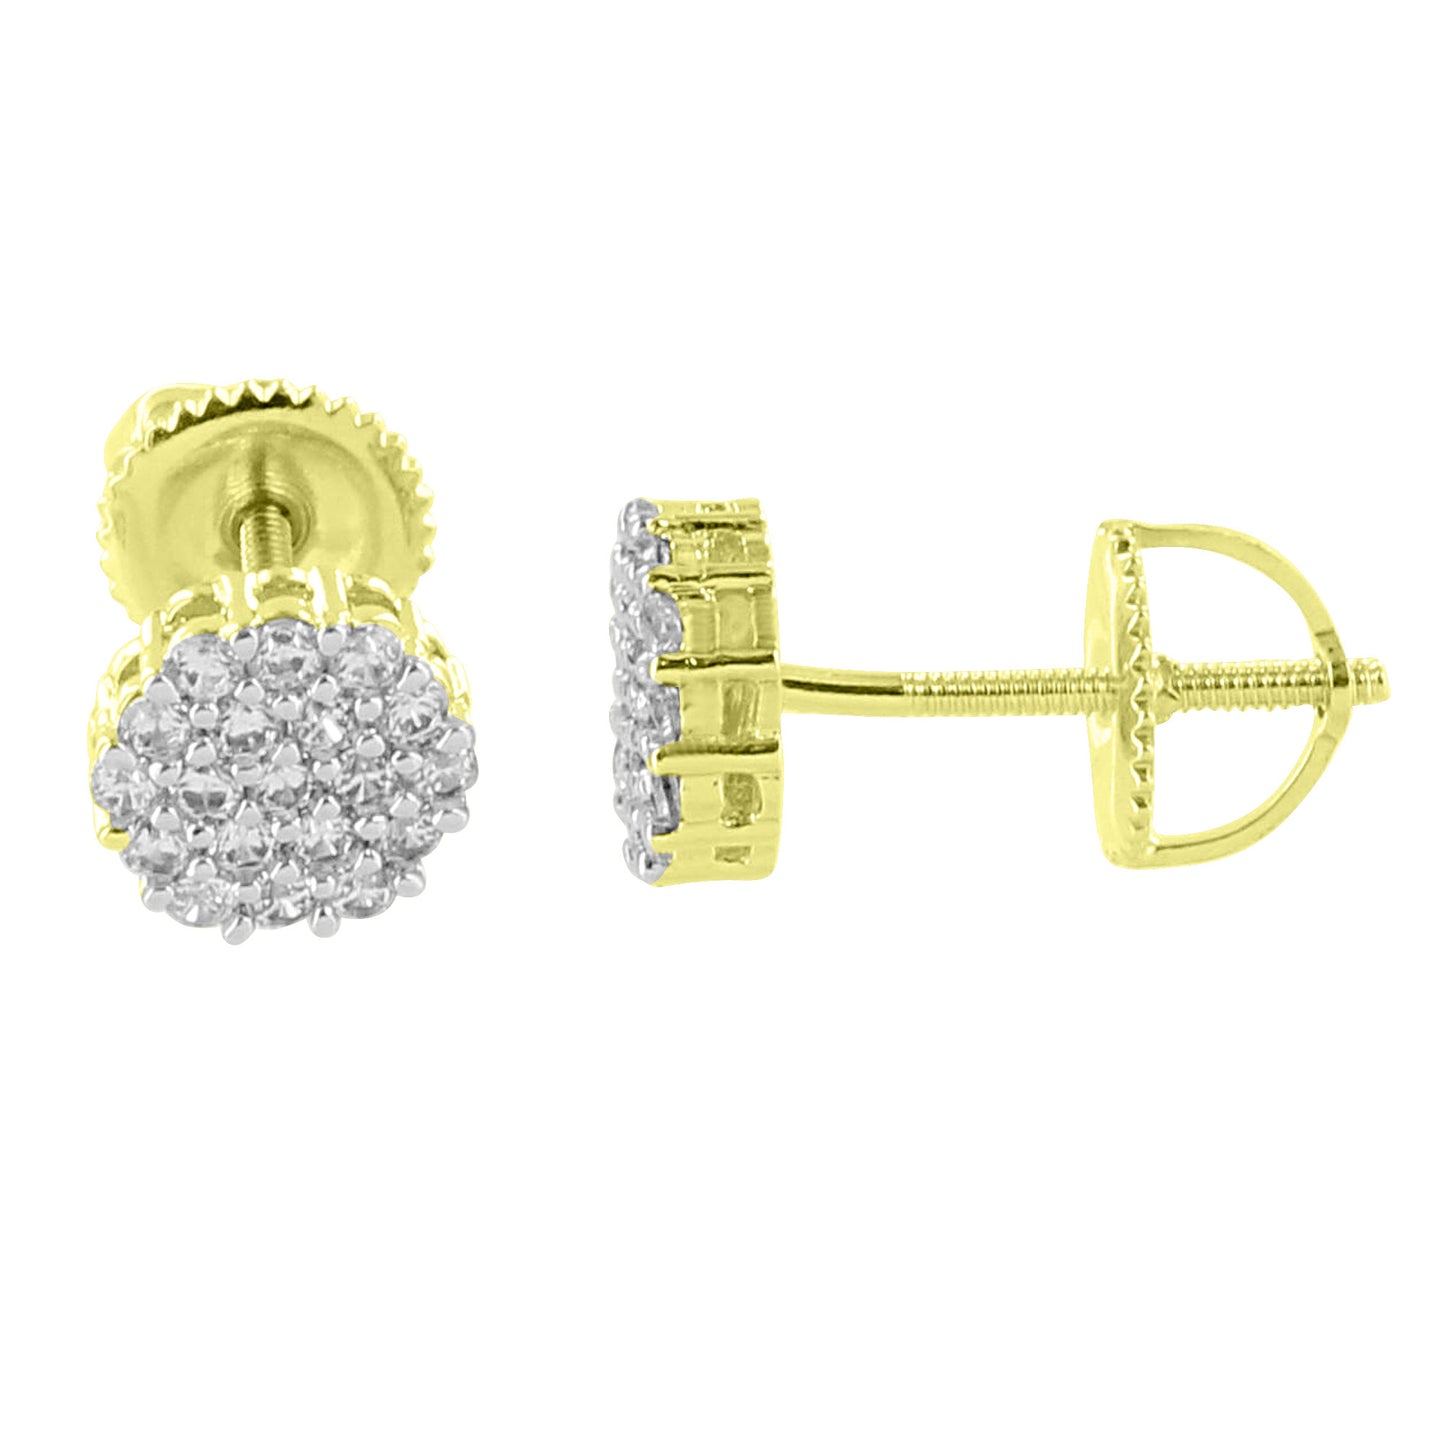 Cluster Set Flower Earrings 14K Yellow Gold Finish Studs Simulated Diamonds Screw Back